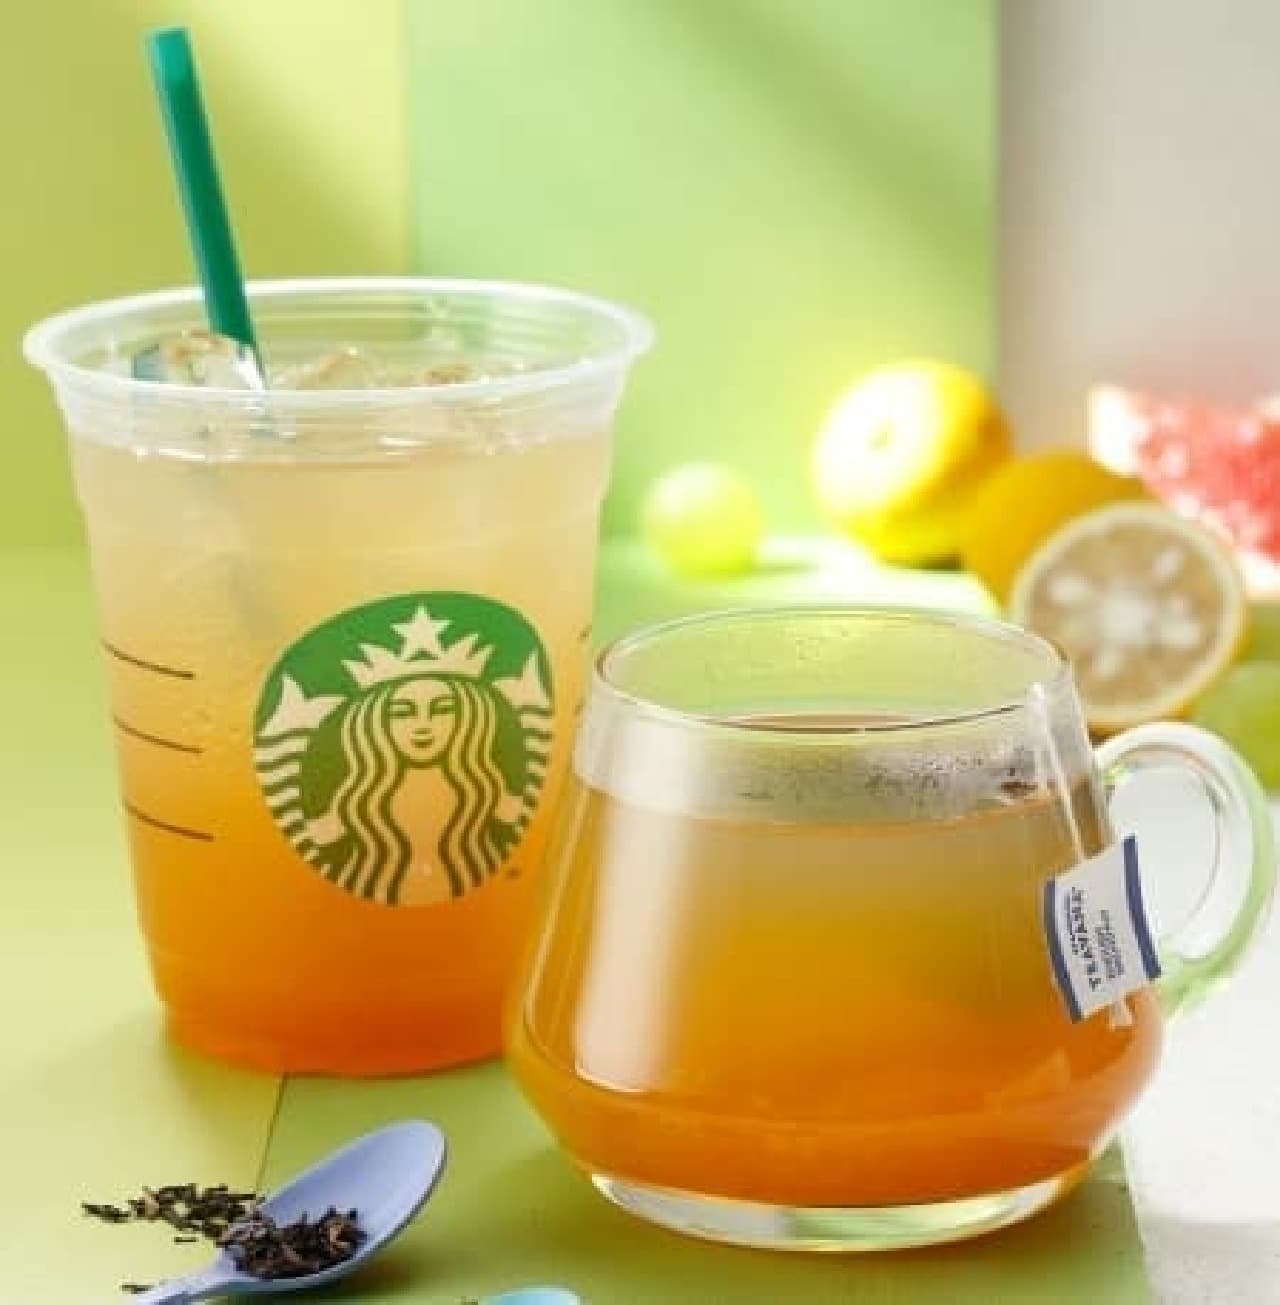 Starbucks Coffee "Yuzu Citrus & Tea"